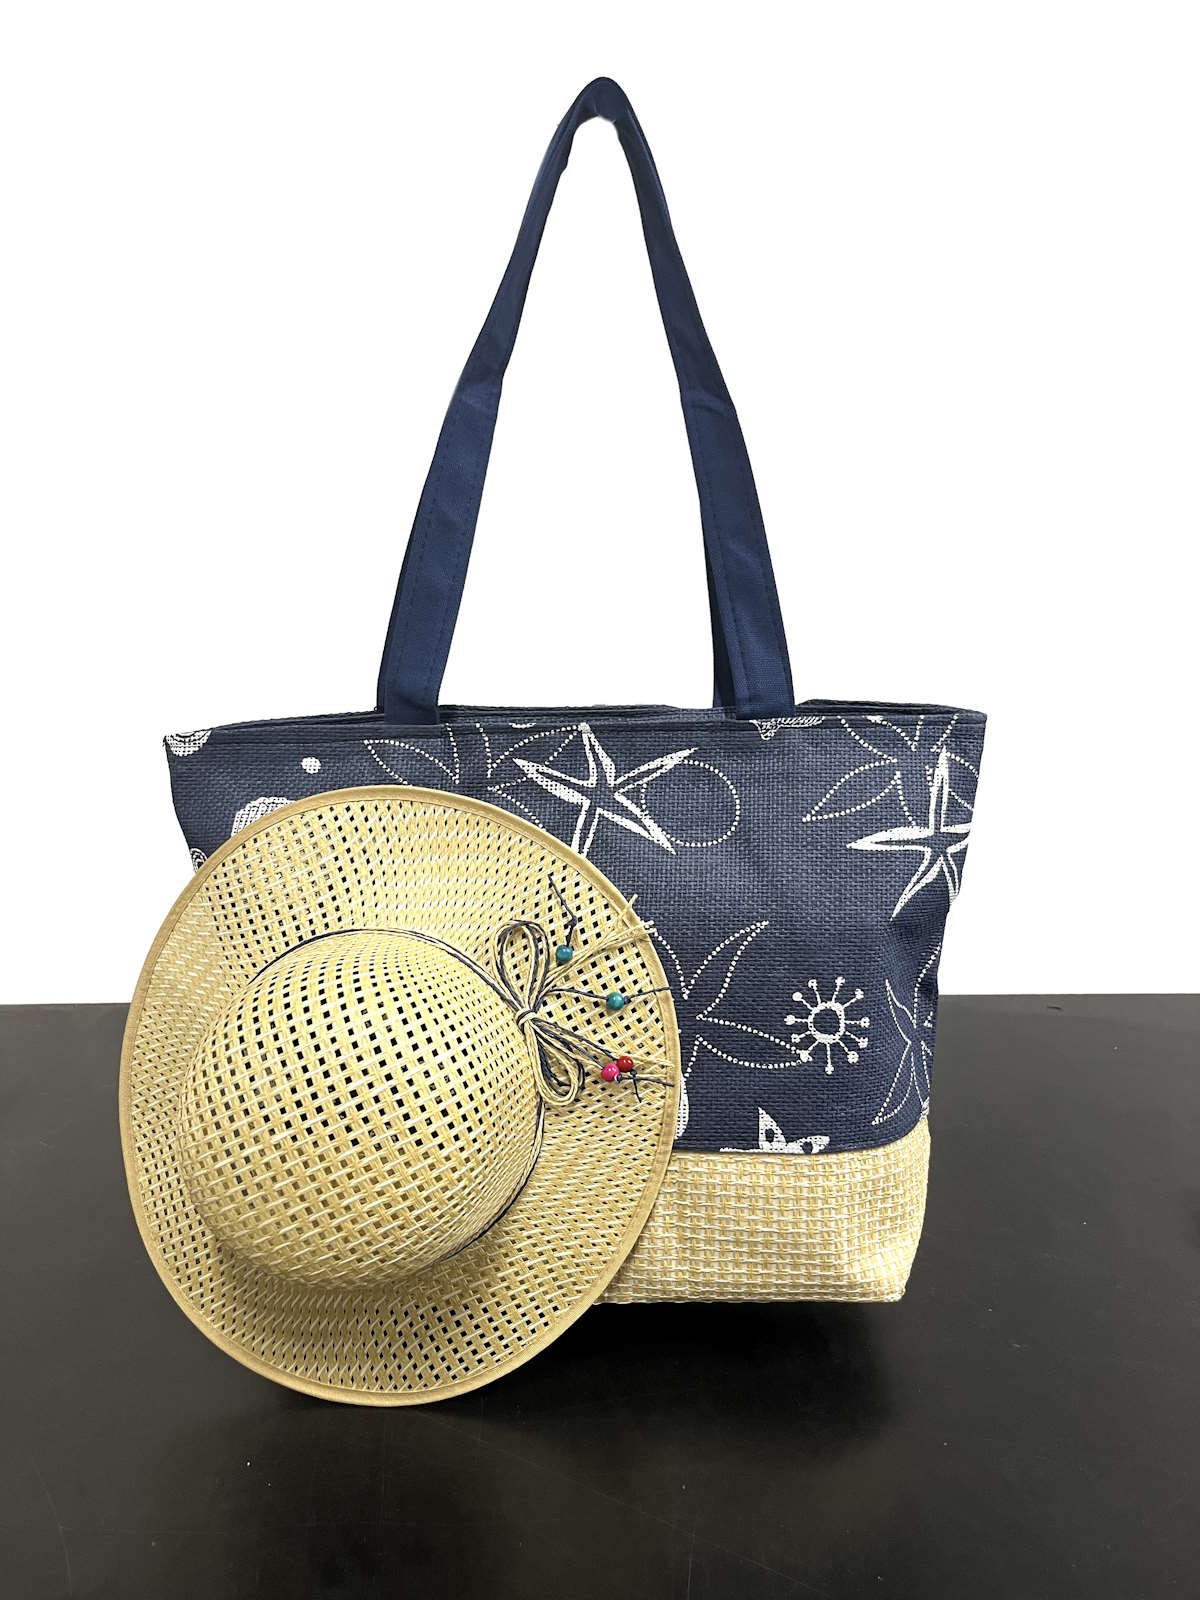 Set of beach bag and hat, brand Juice, art. 103208.155